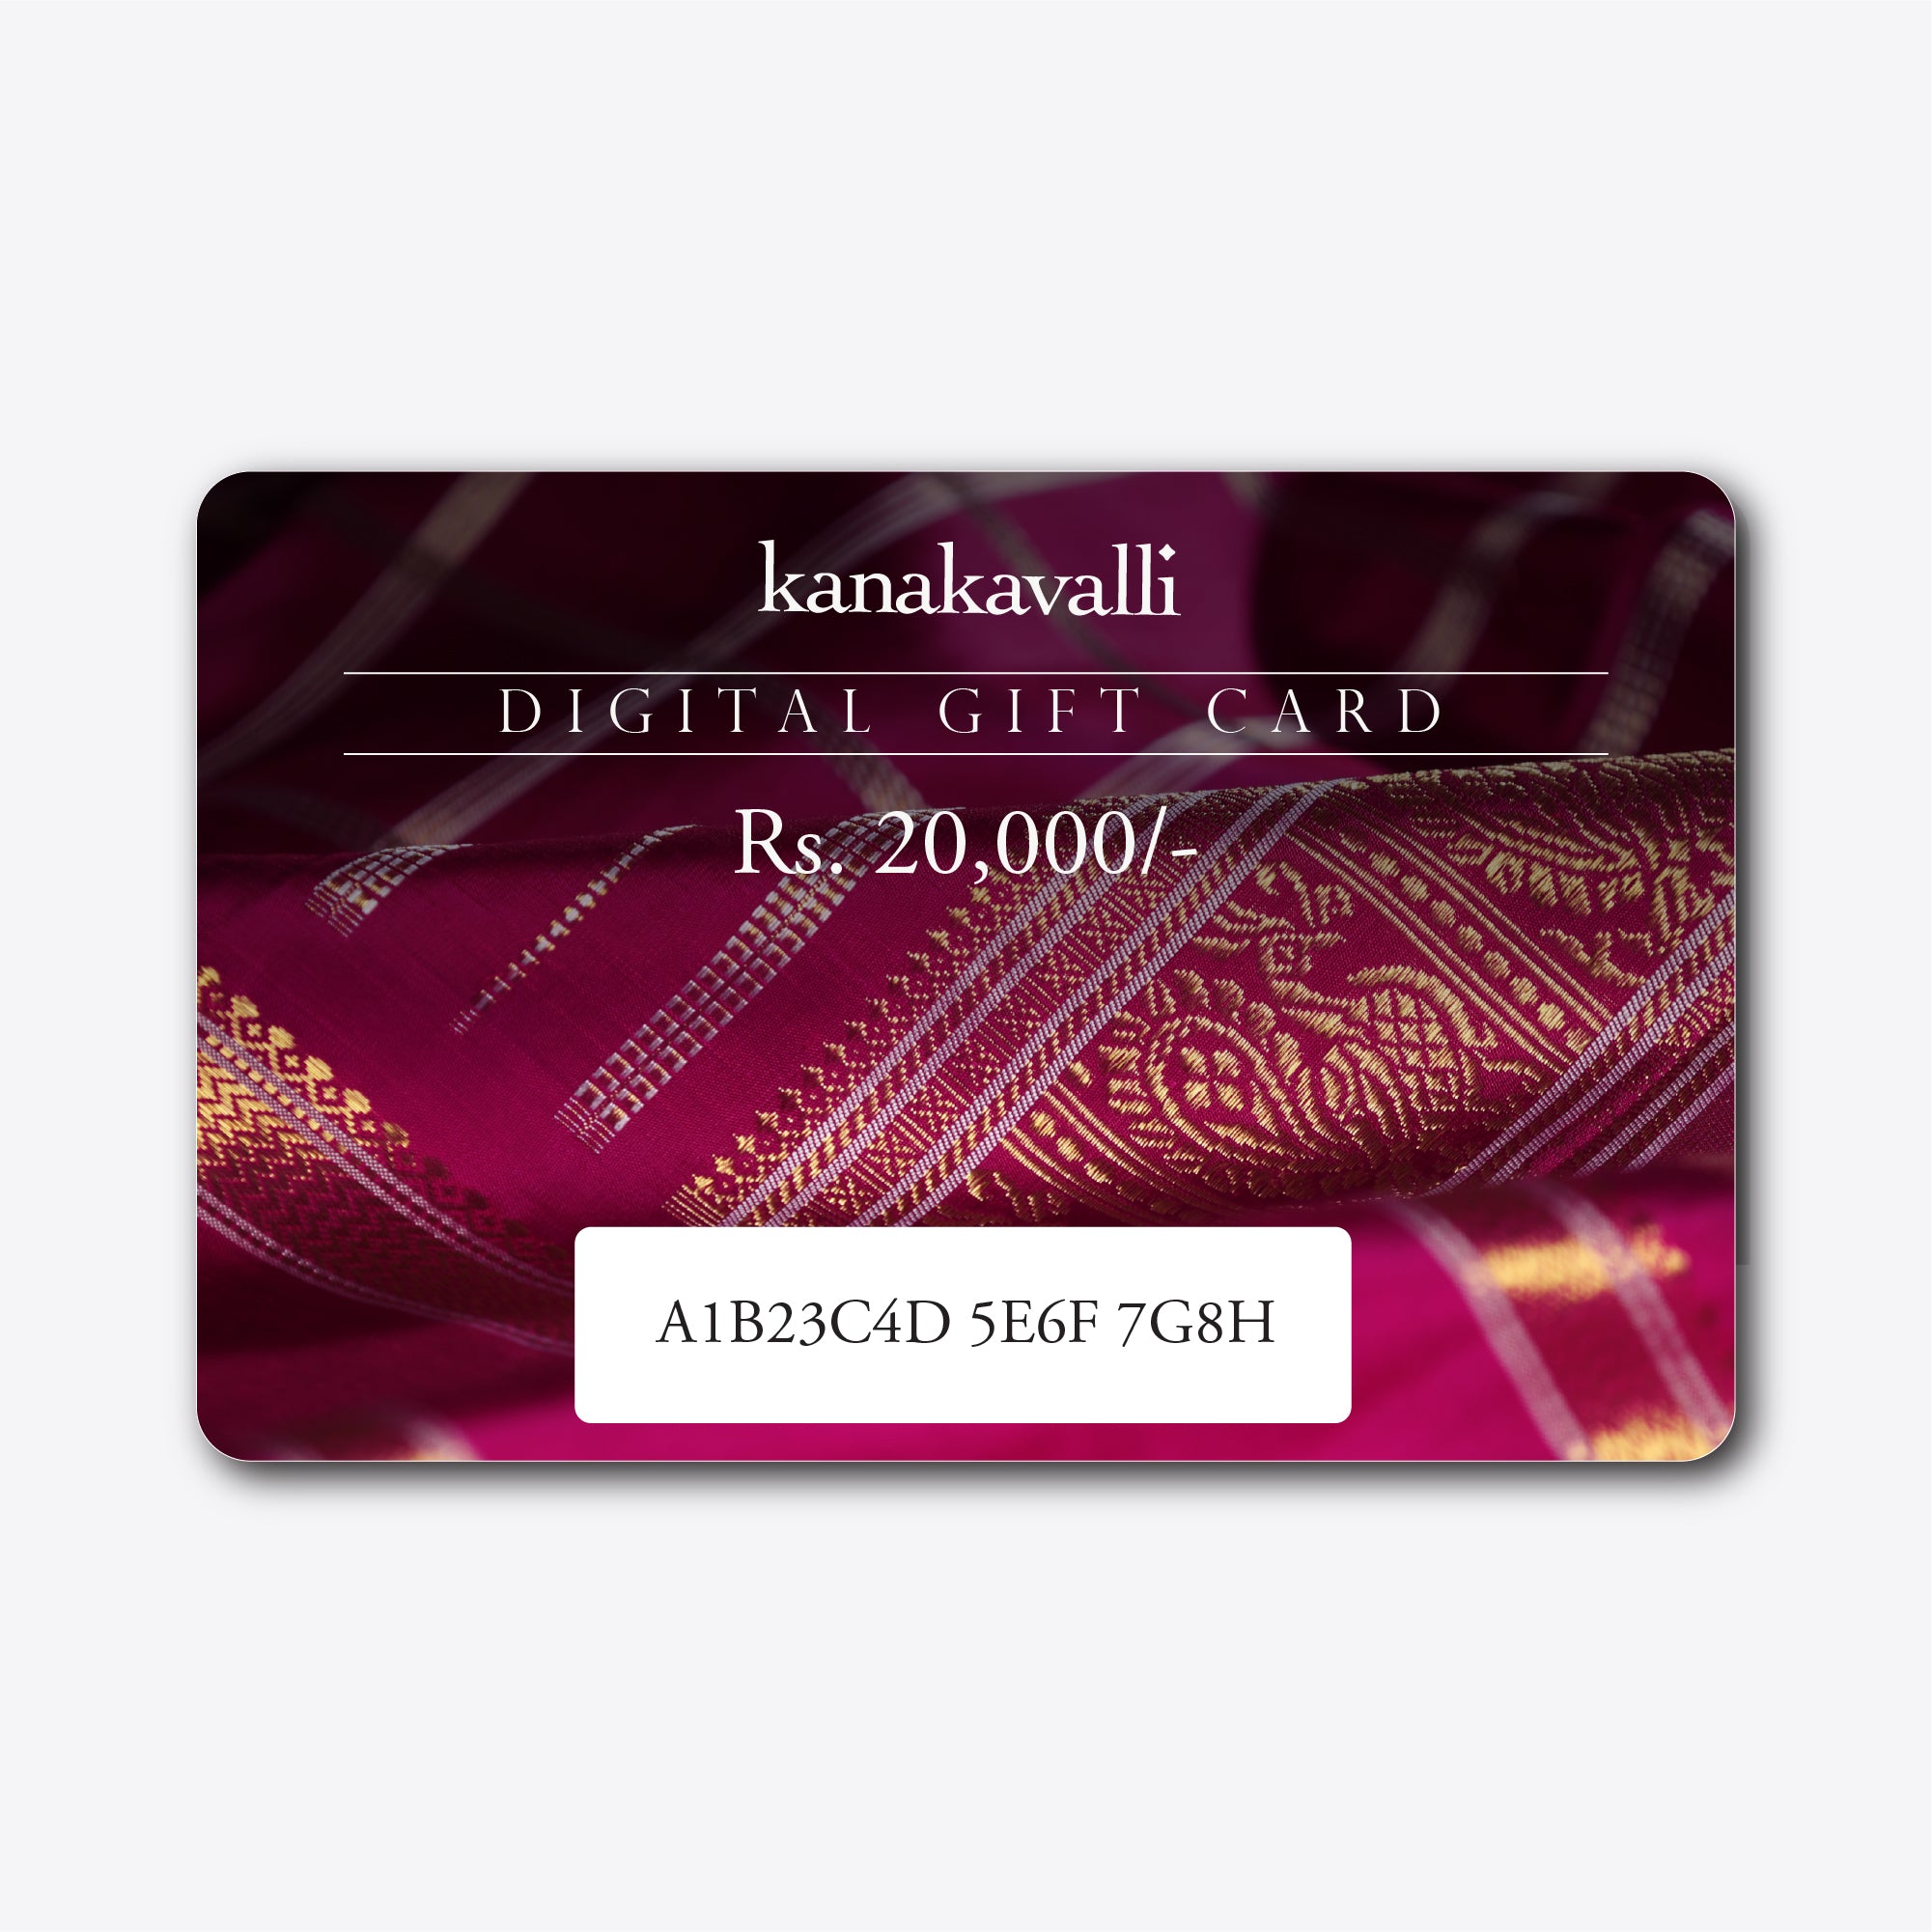 Kanakavalli Digital Gift Card